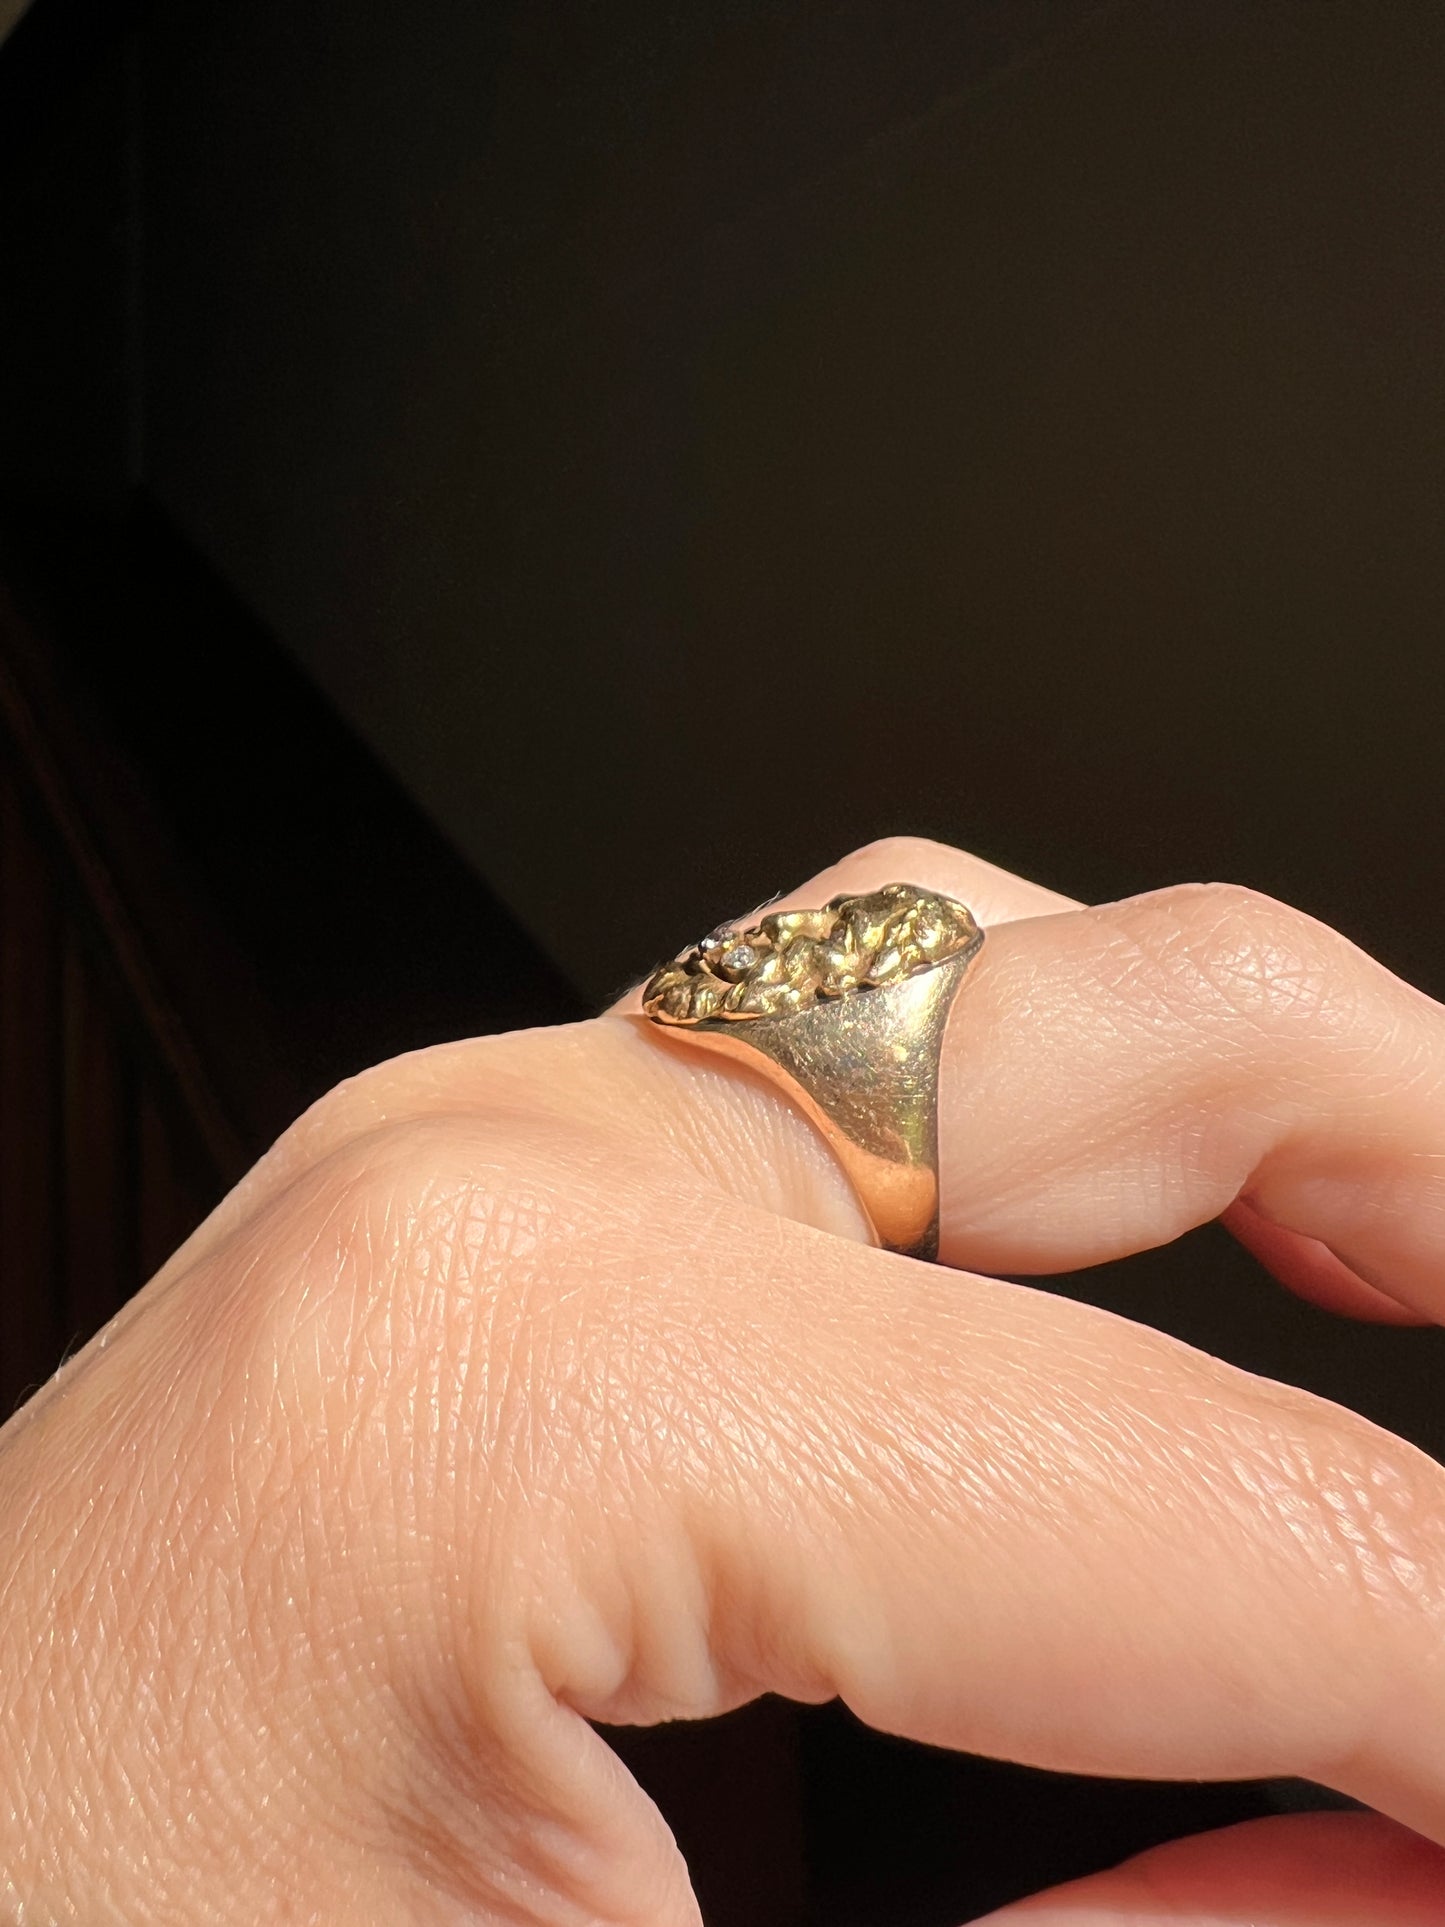 Unique FACE Figural Ring 14k Gold Diamonds